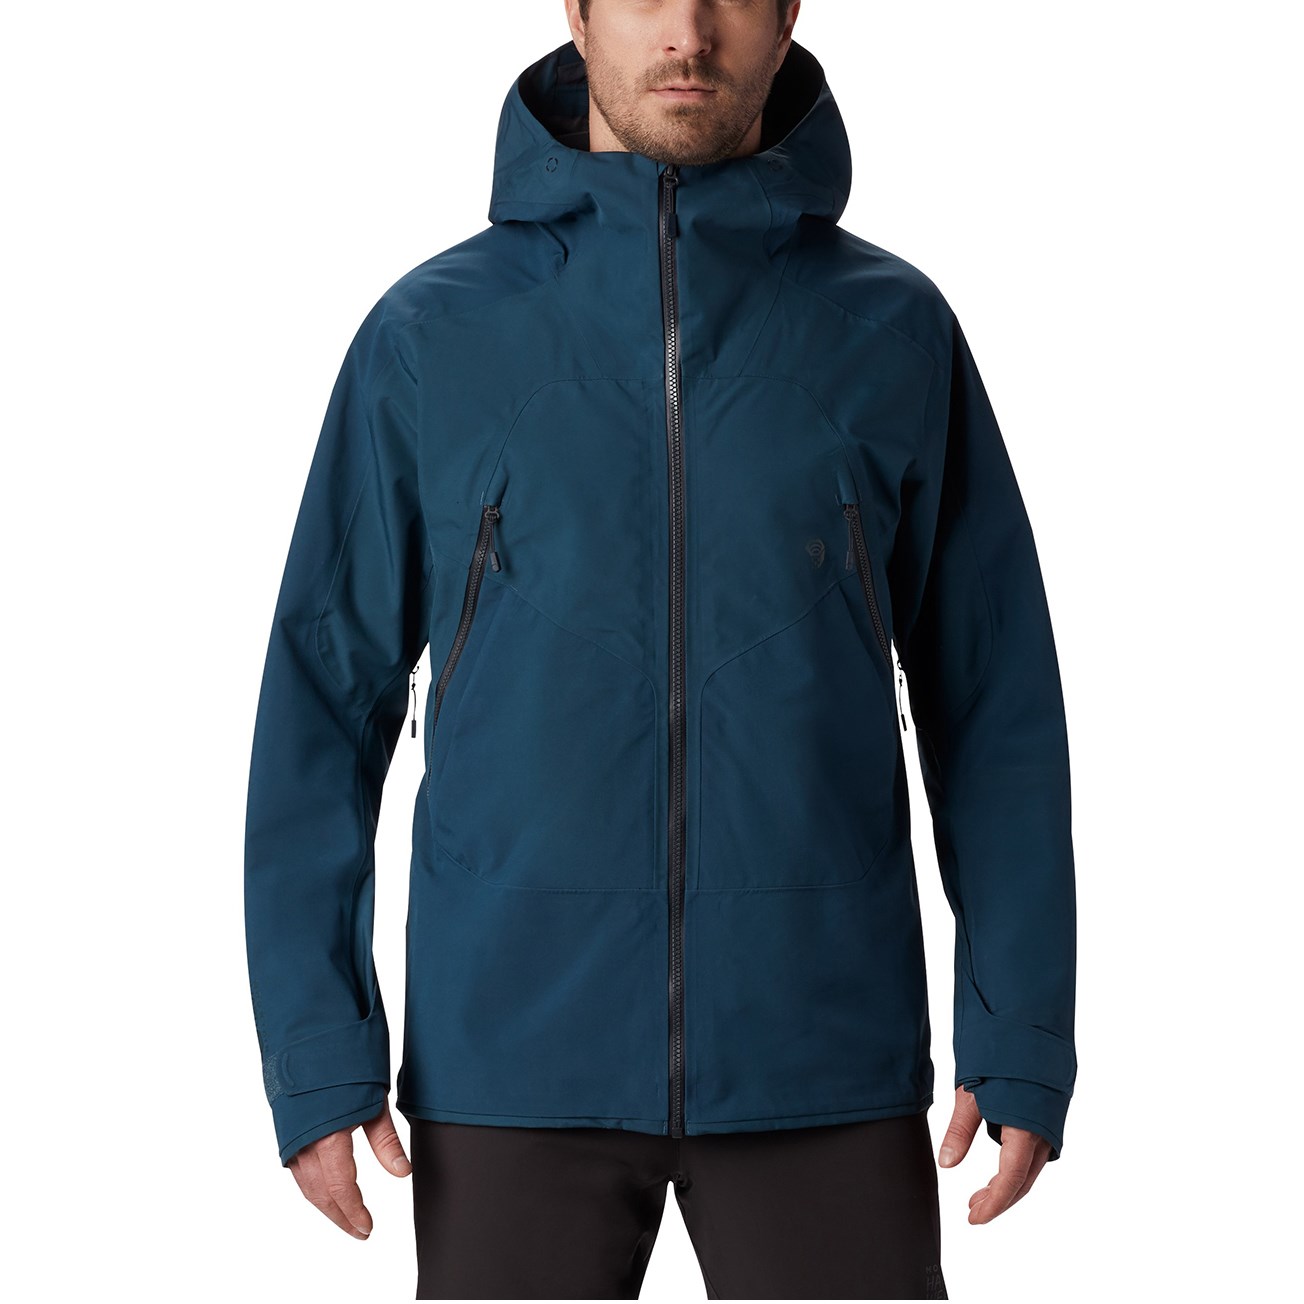 Mountain Hardwear Boundary Ridge™ GORE-TEX 3L Jacket